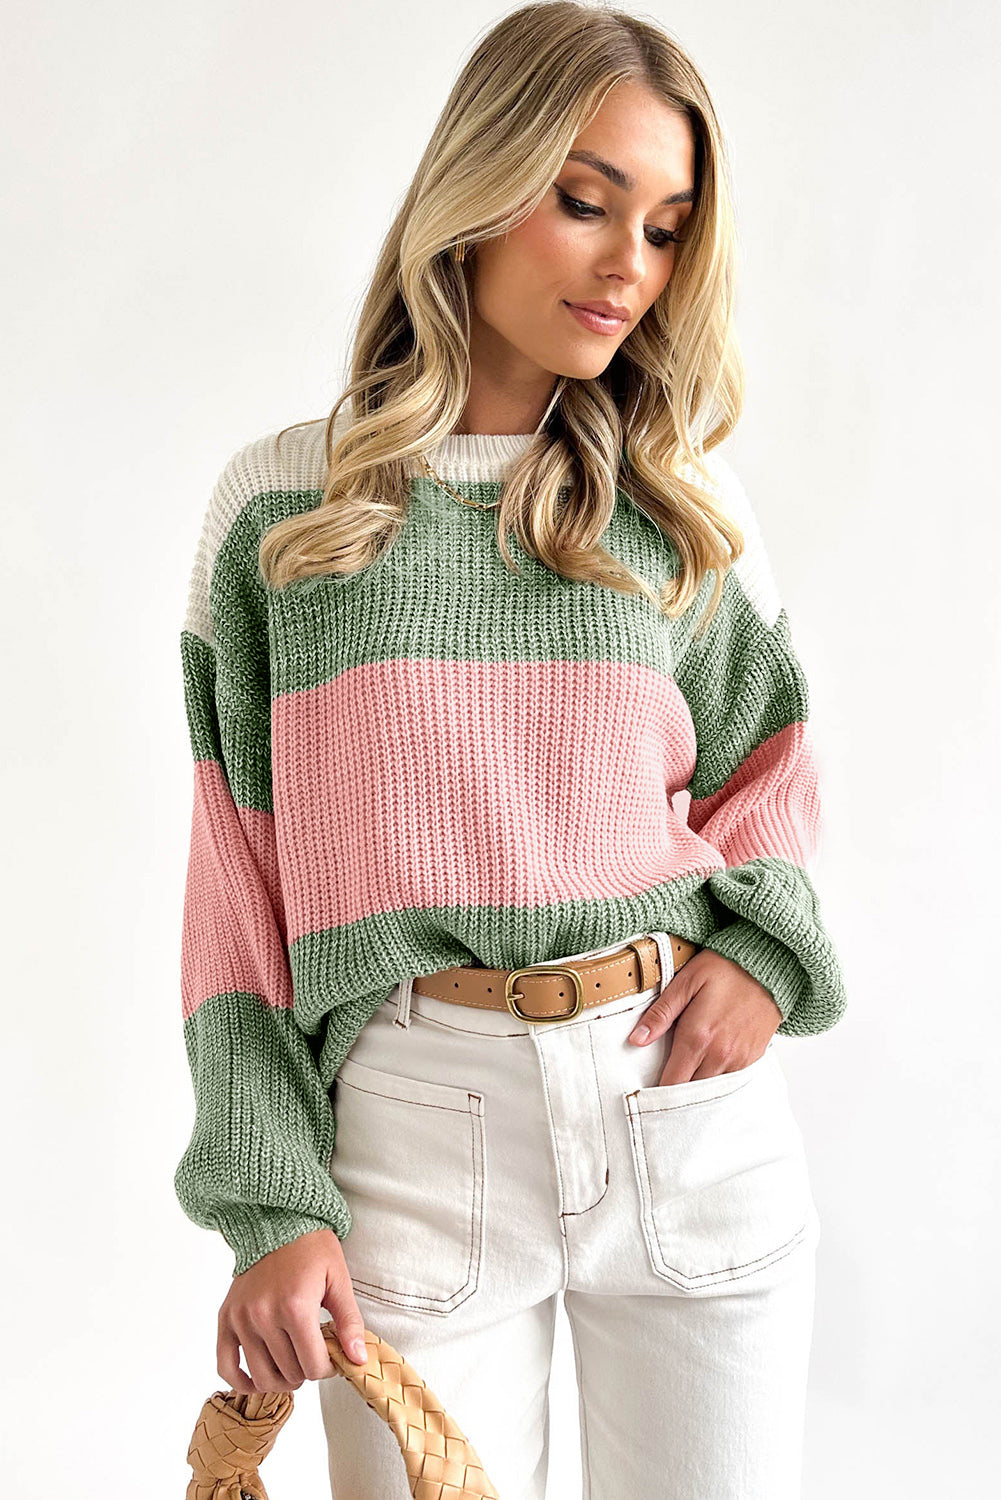 Grüner Colorblock-Pullover mit überschnittener Schulter, lockerer Pullover